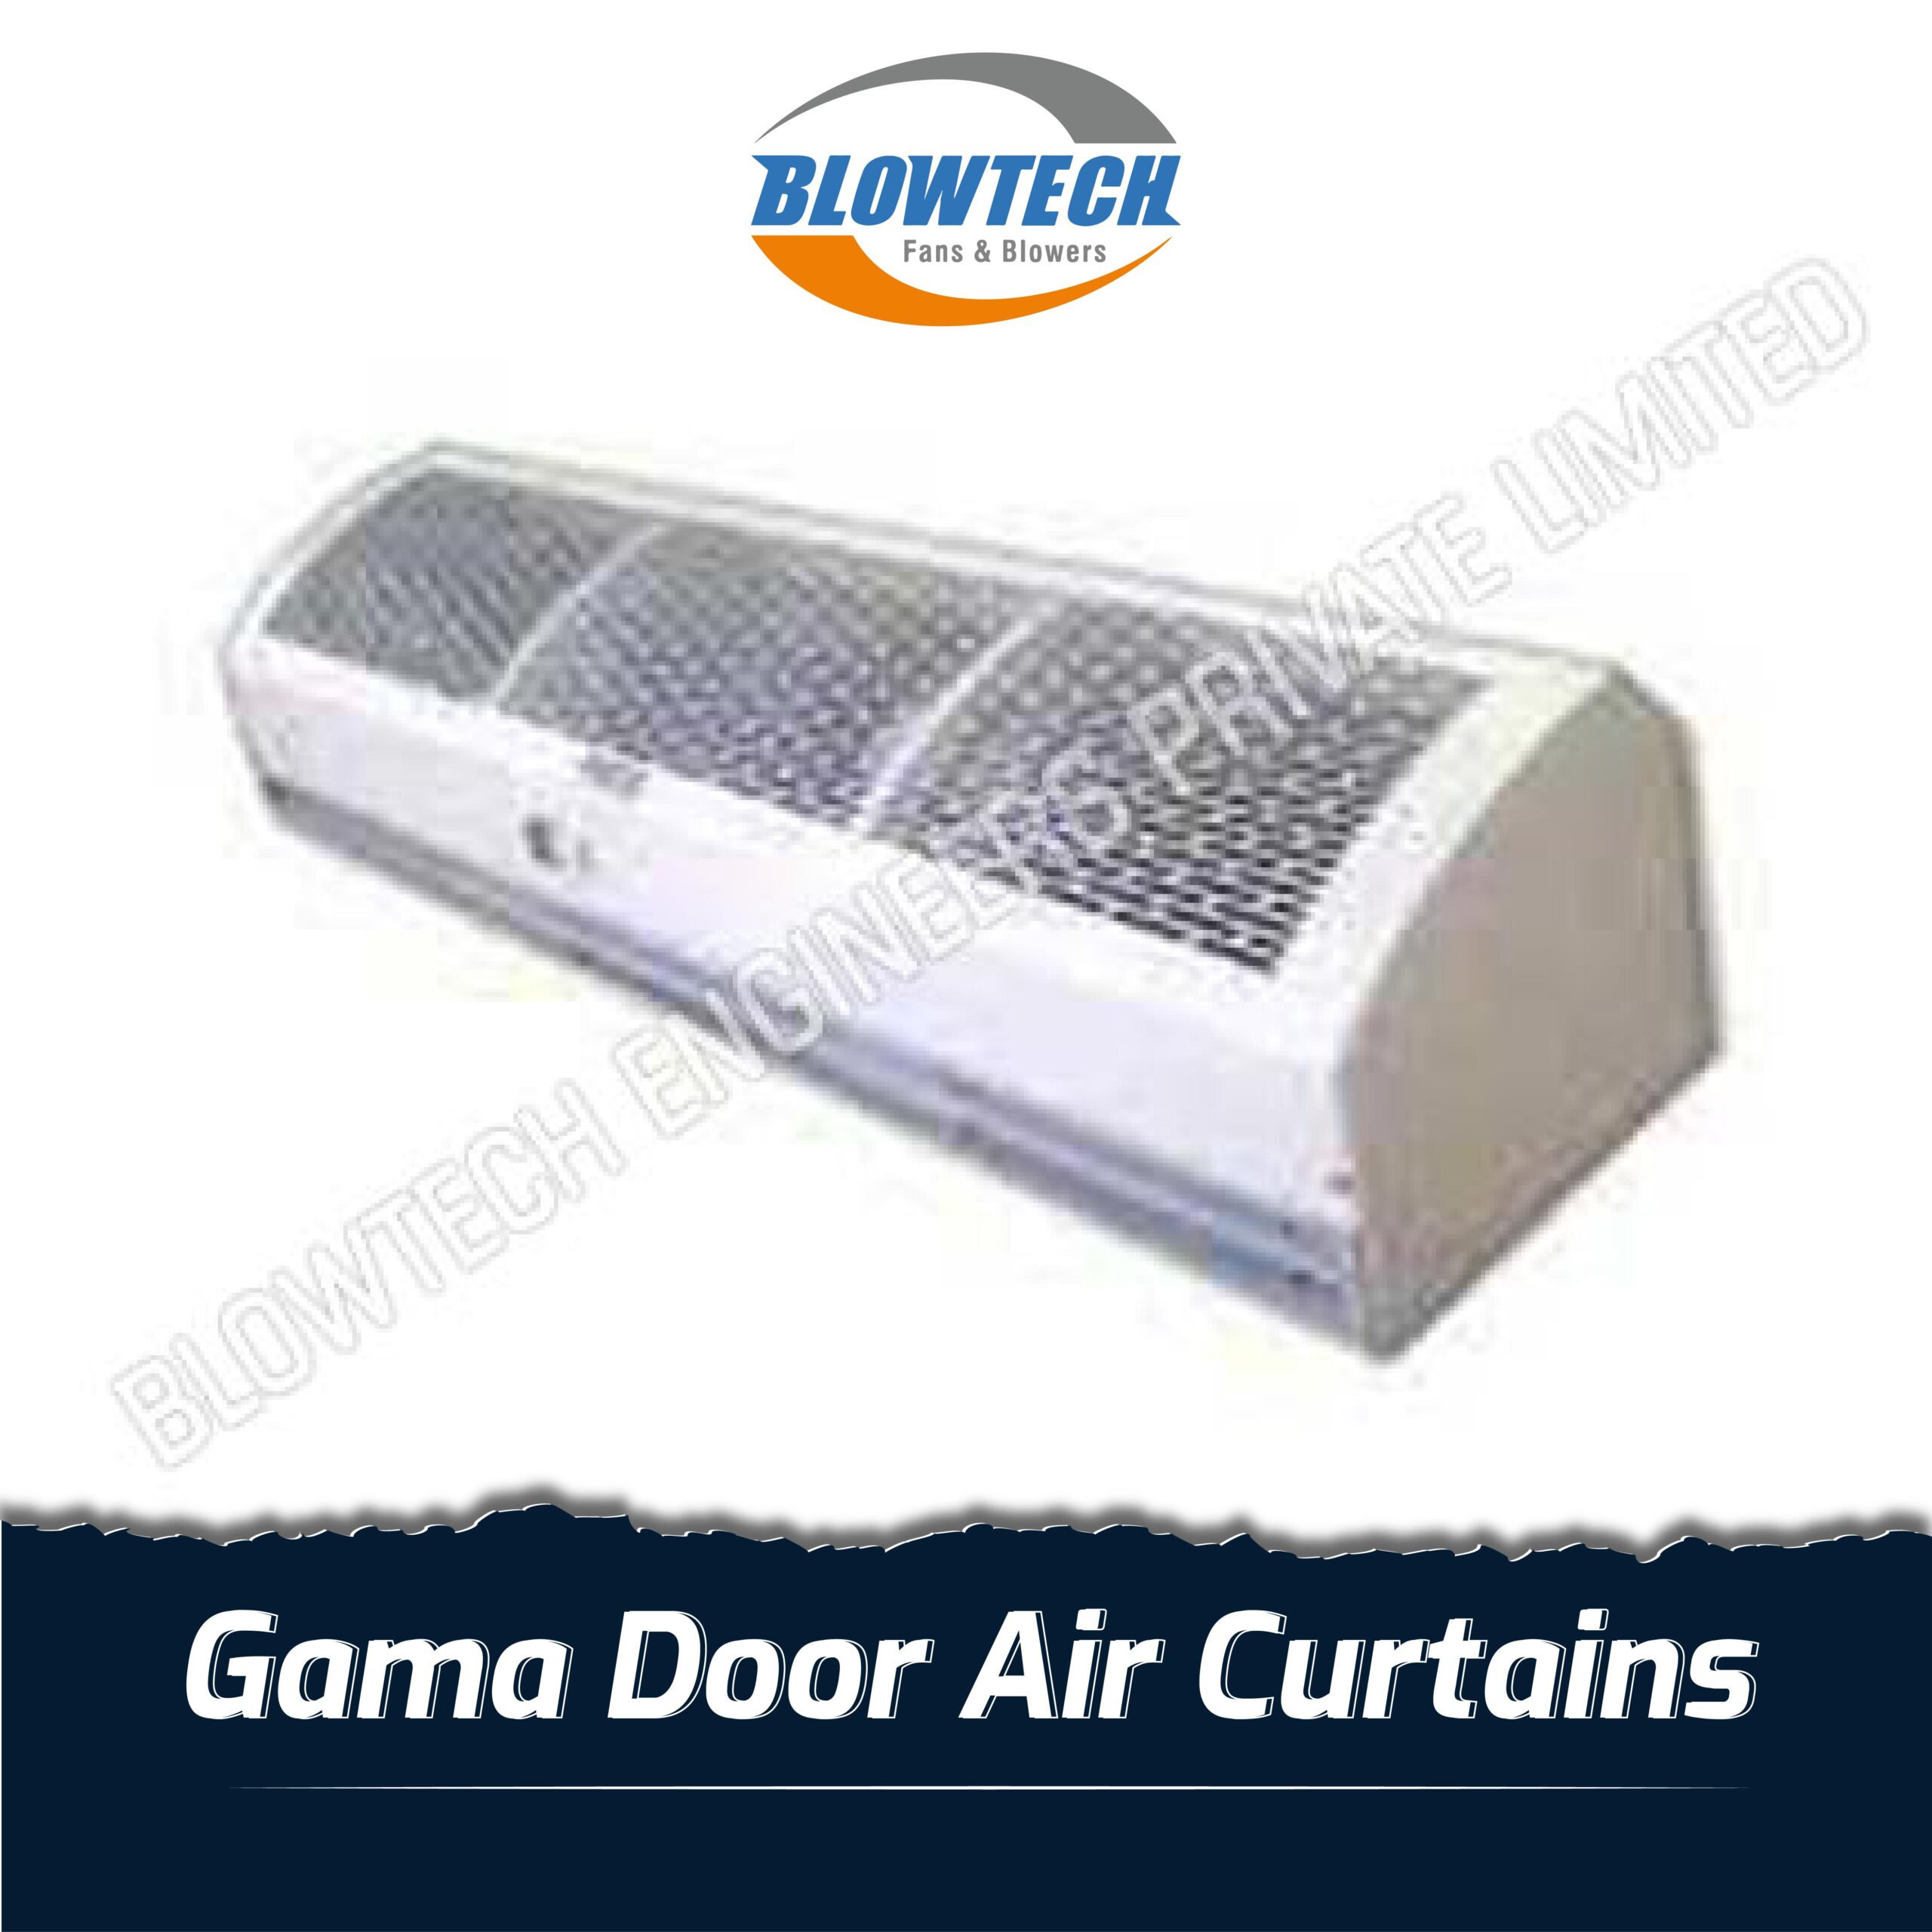 Gama Door Air Curtains  manufacturer, supplier and exporter in Mumbai, India